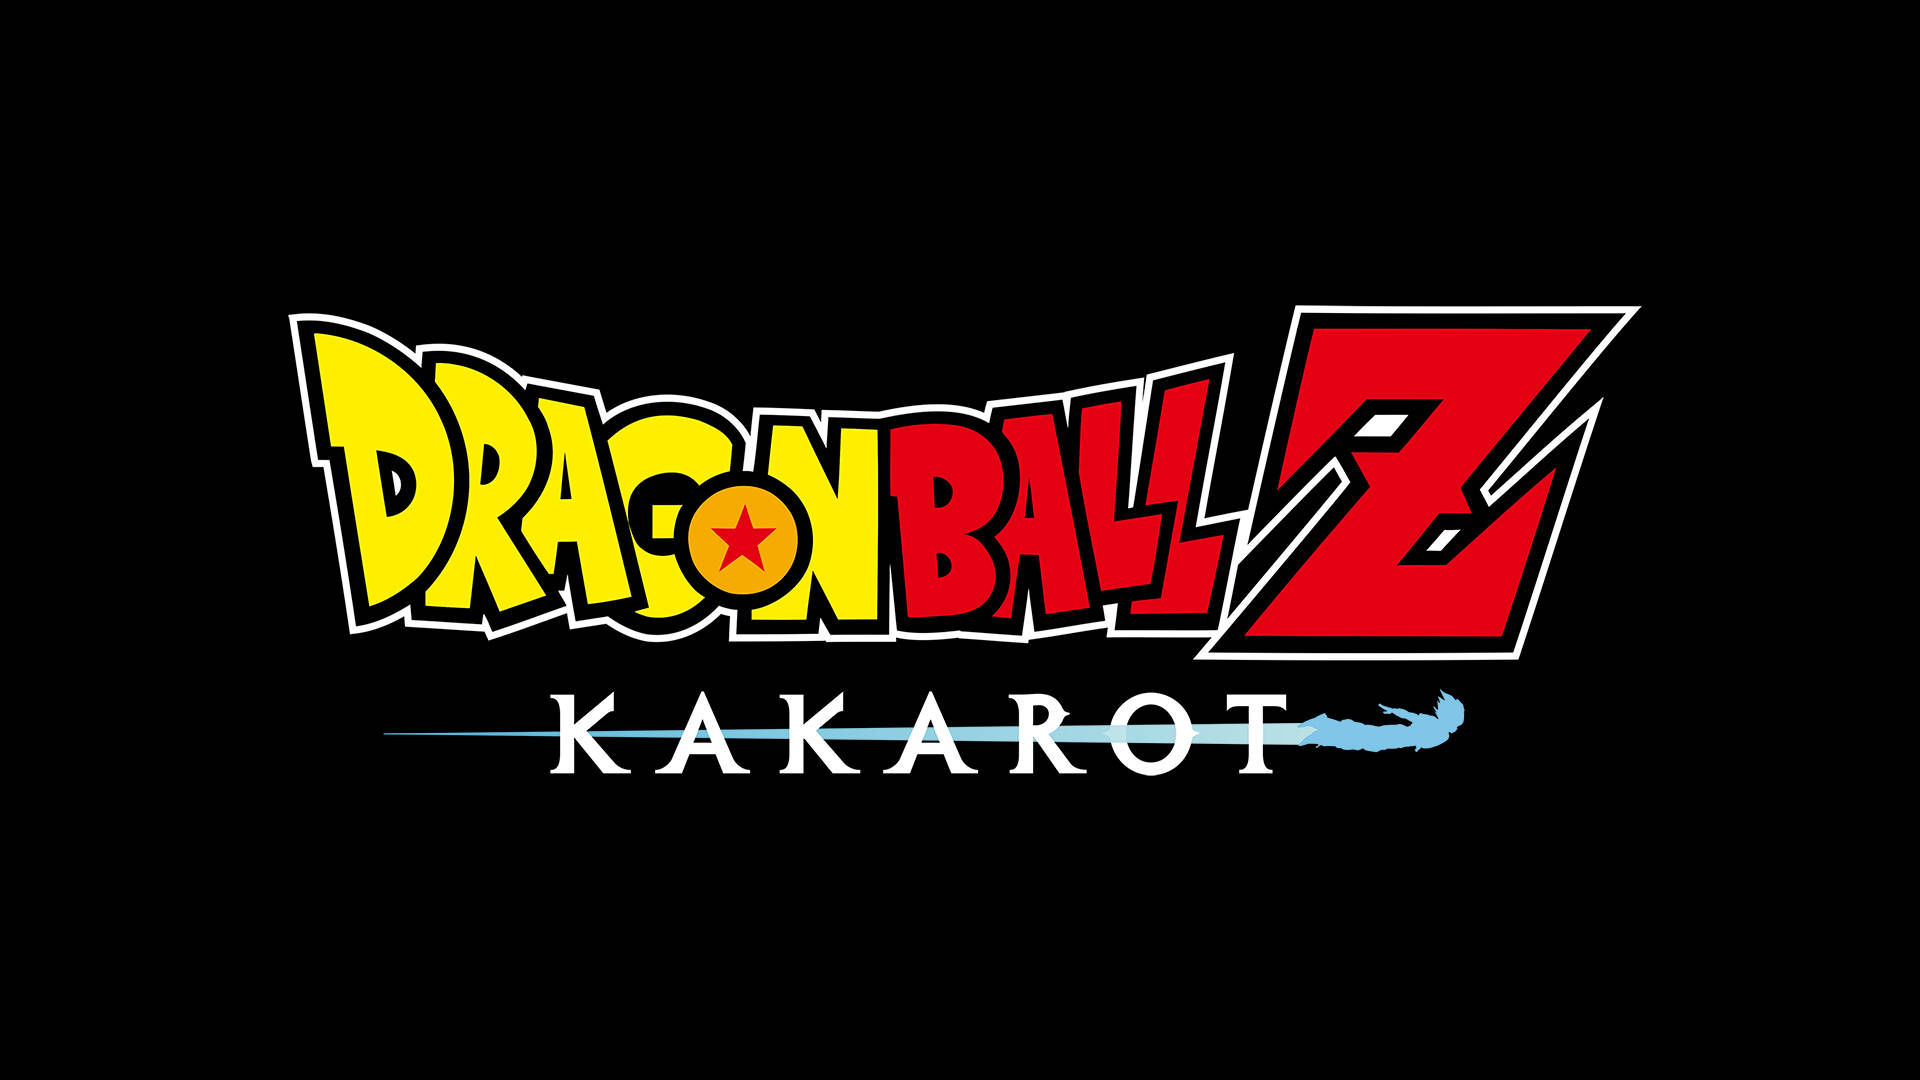 Dragon Ball Z Logo Kakarot Tapet: Tag kommandoen over Goku mens du svæver gennem himlen. Wallpaper